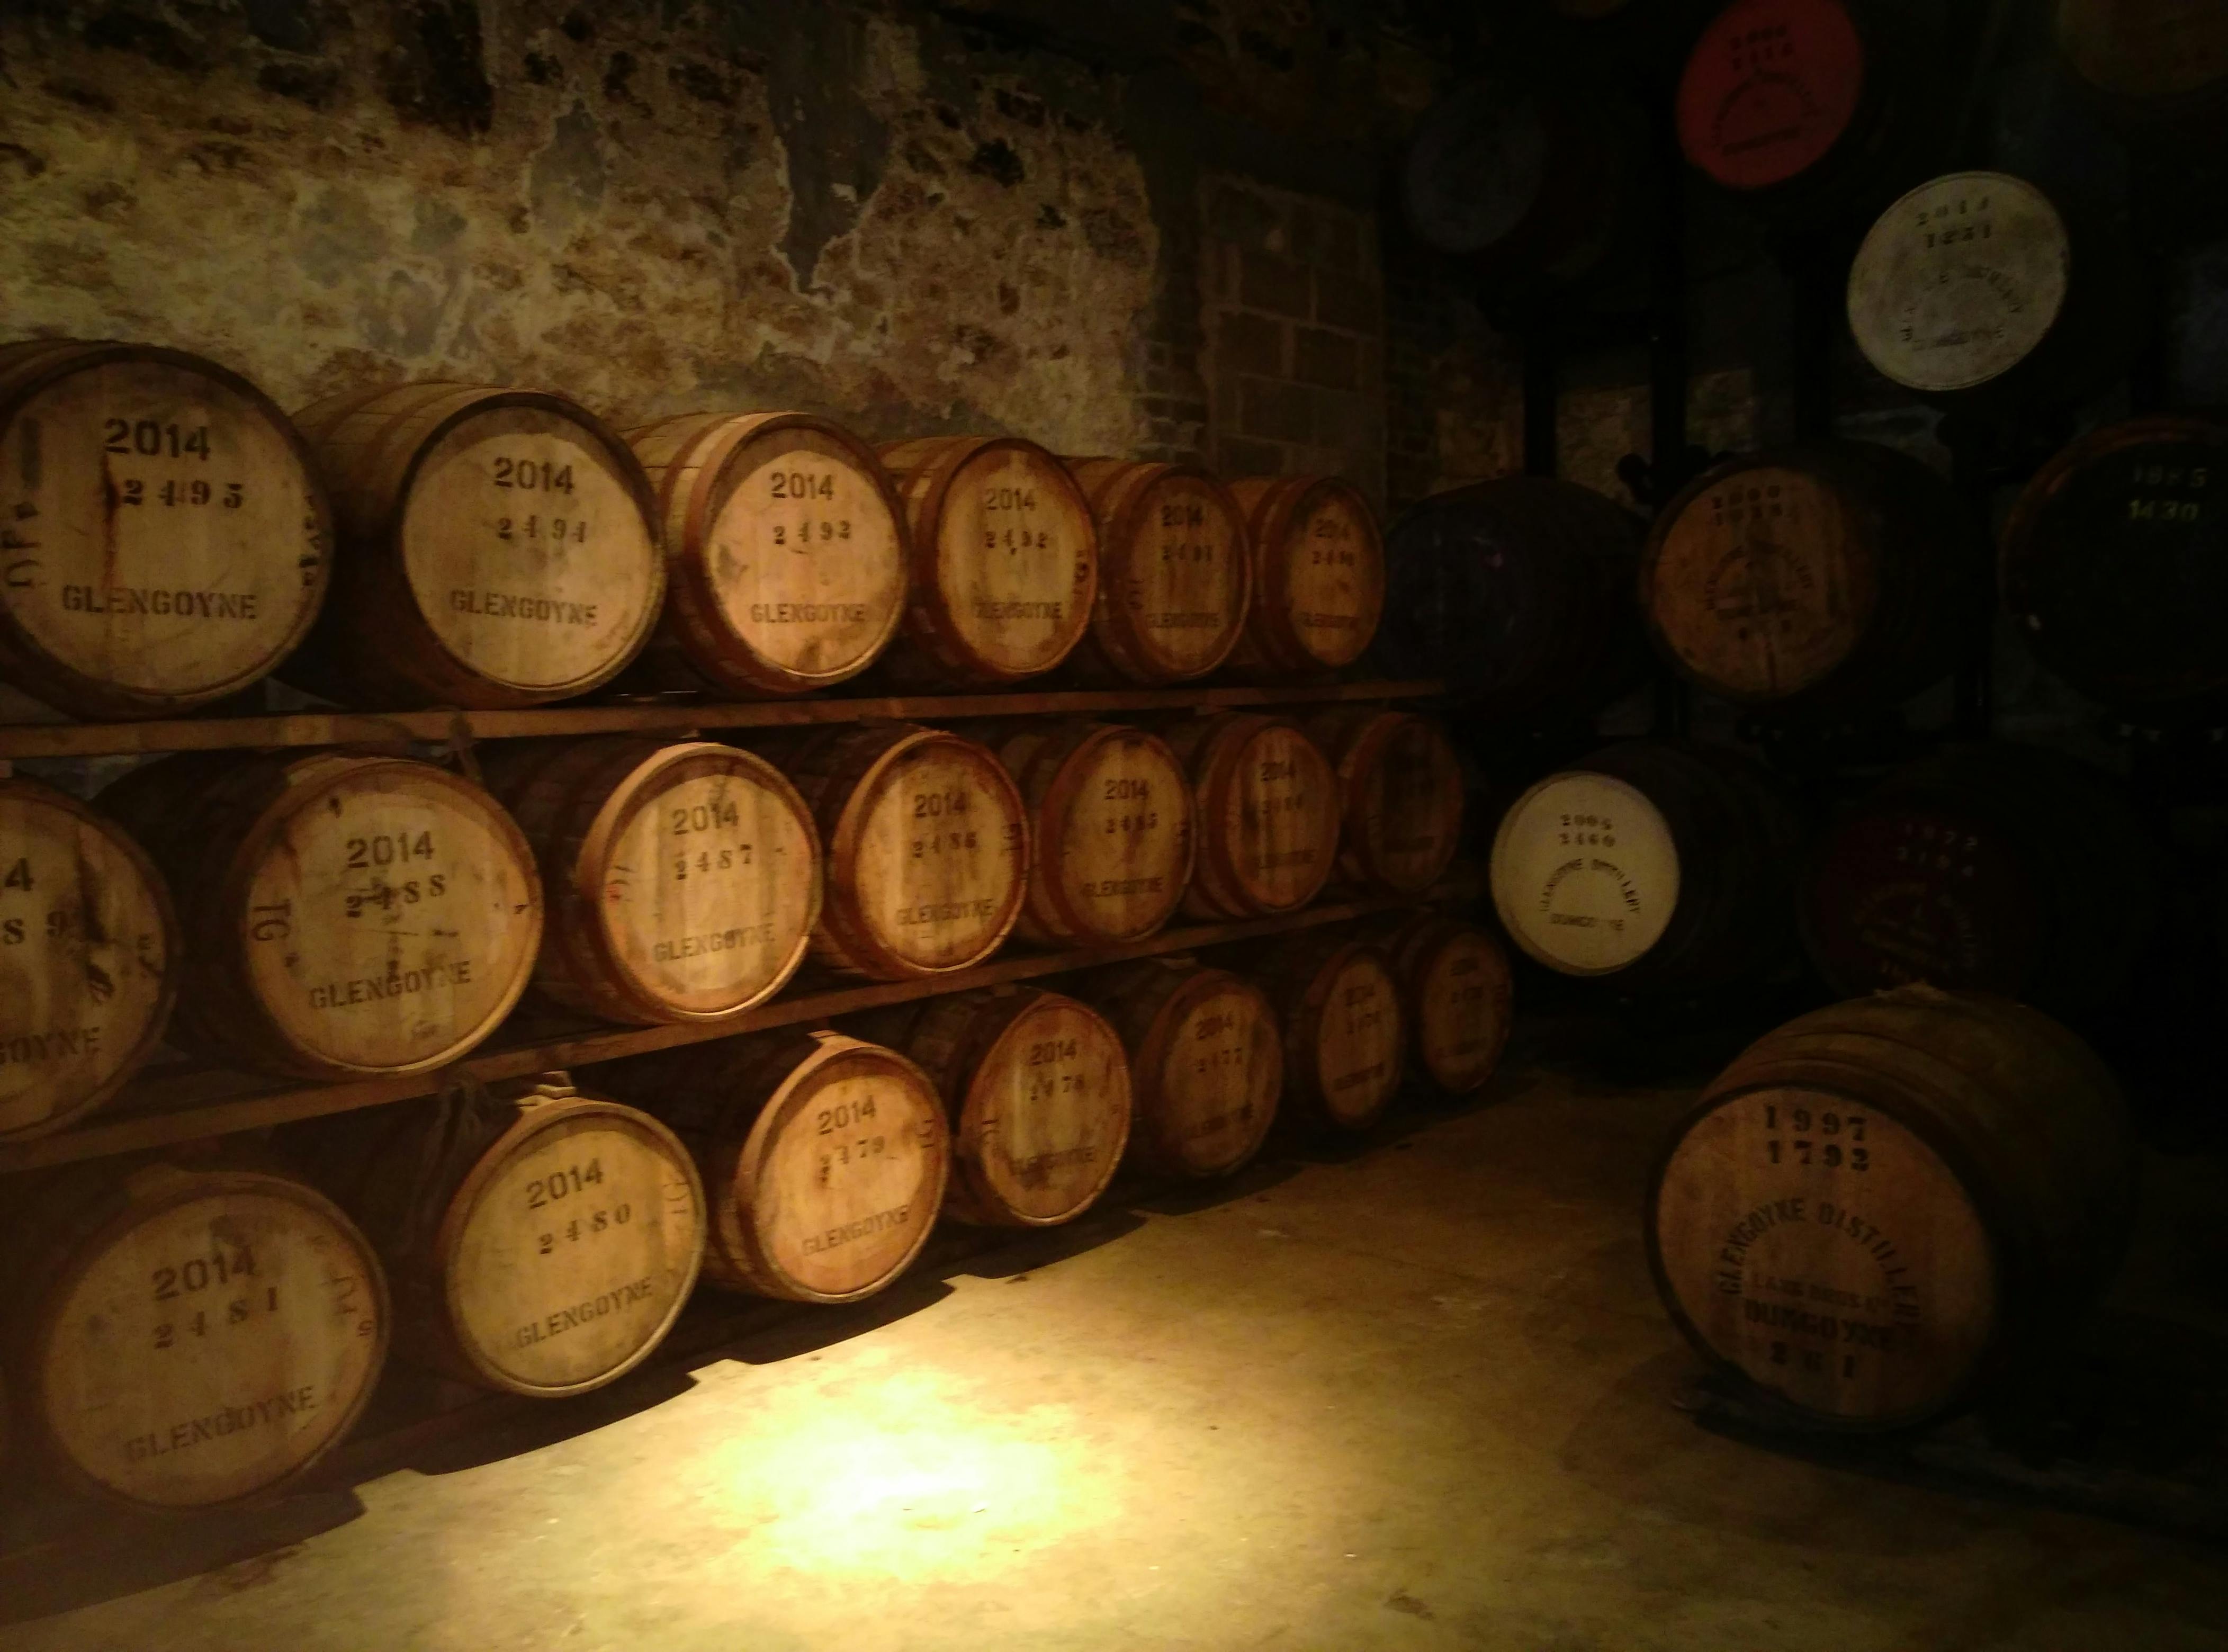 Free stock photo of whiskey barrels